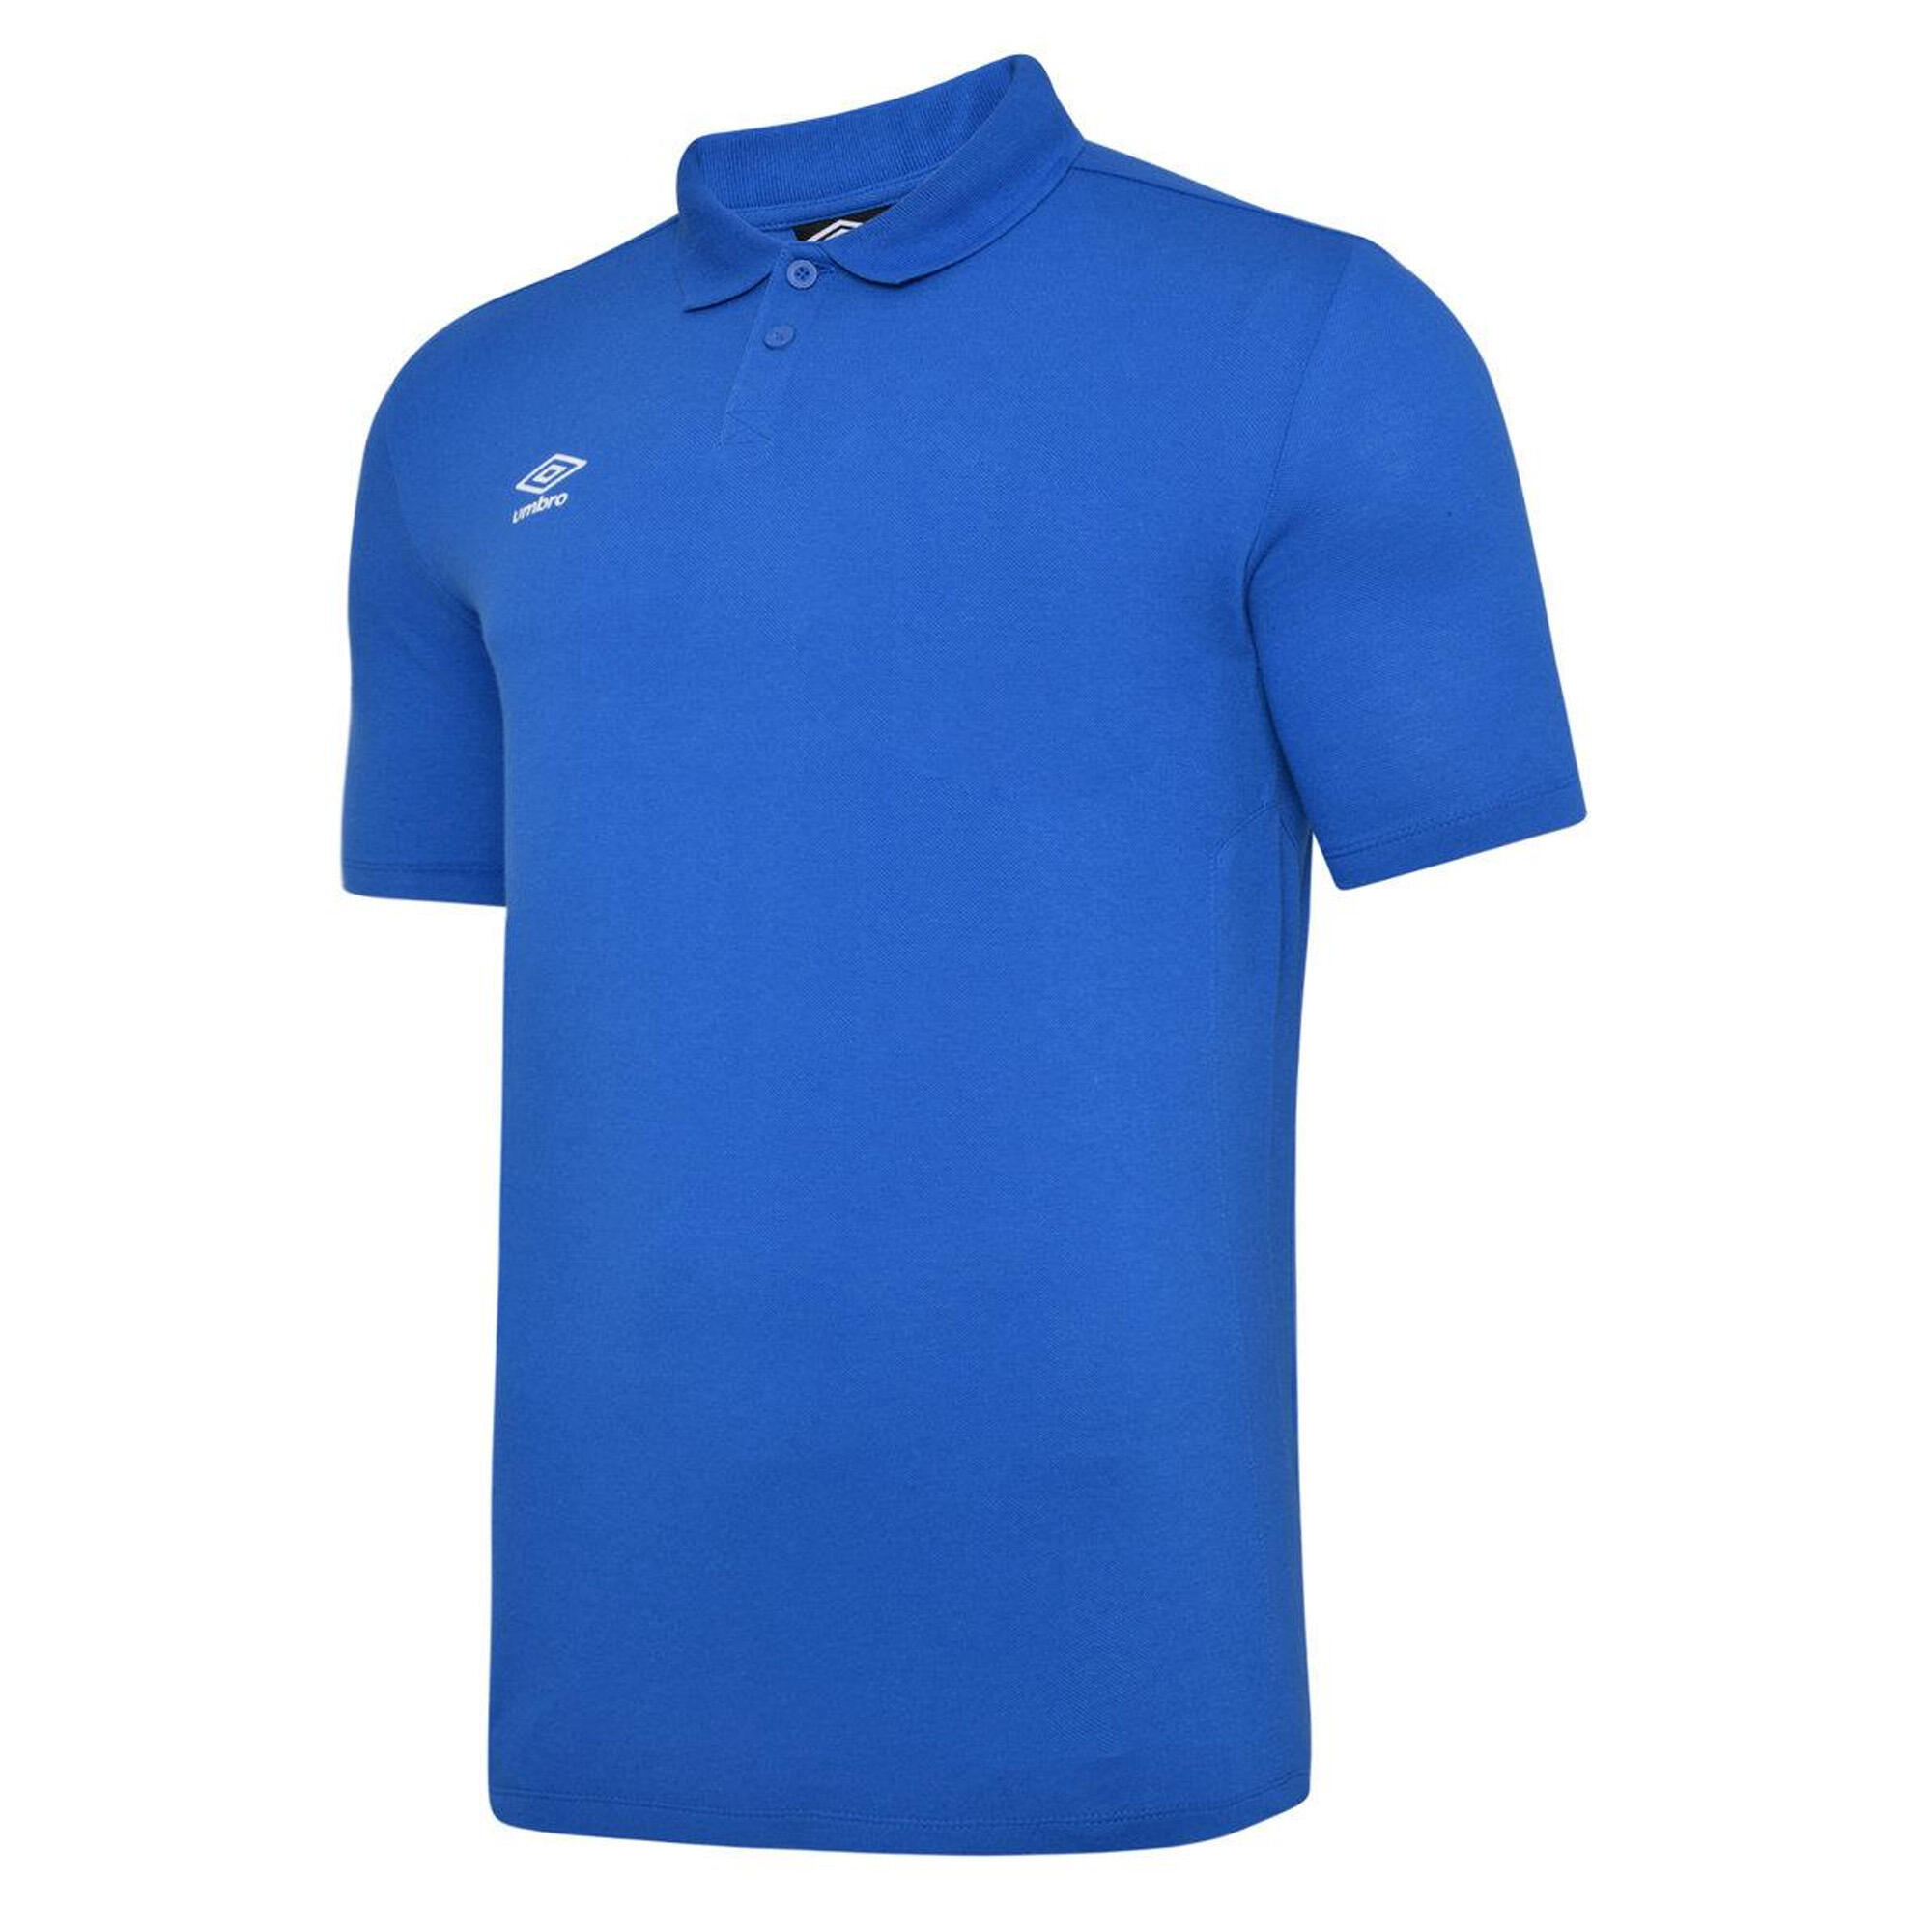 UMBRO Boys Essential Polo Shirt (Royal Blue/White)